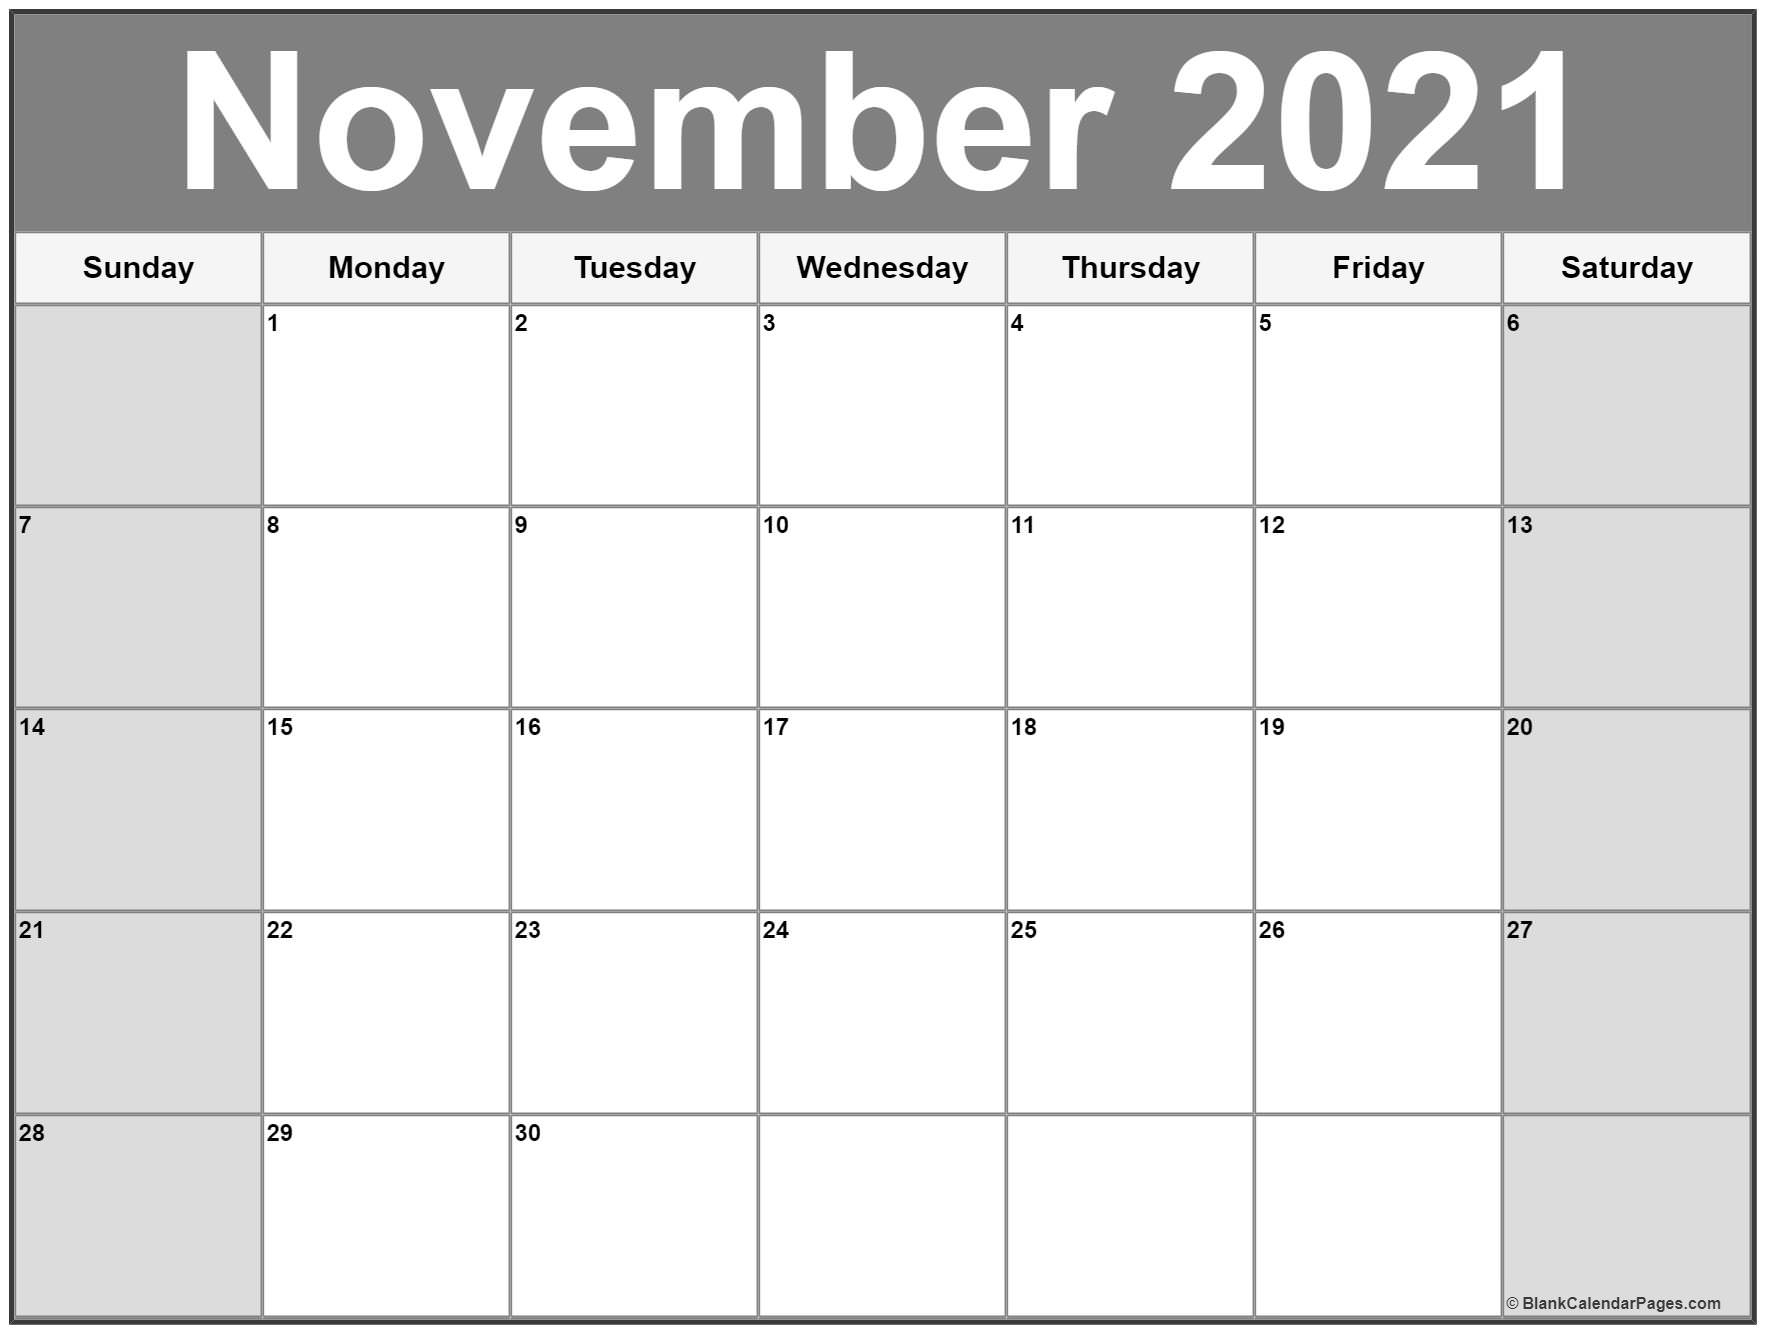 November 2021 Calendar | 56+ Templates Of 2021 Printable Calendars 2021 Calendar November Month